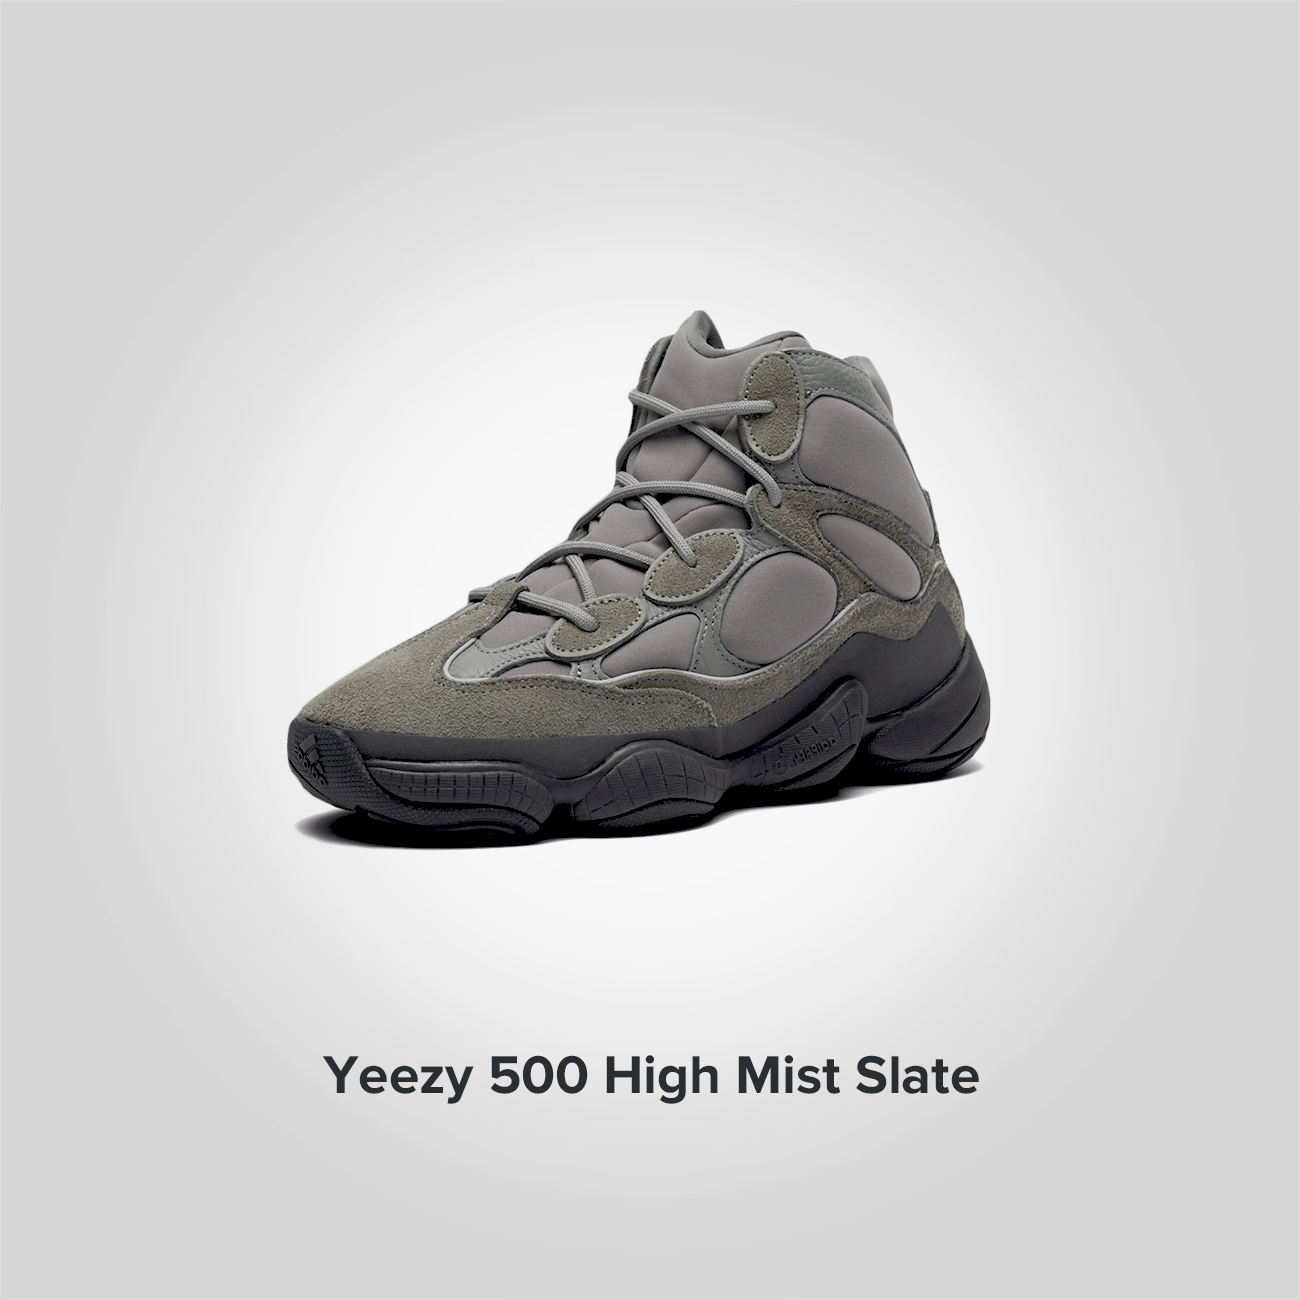 Yeezy 500 High Mist Slate